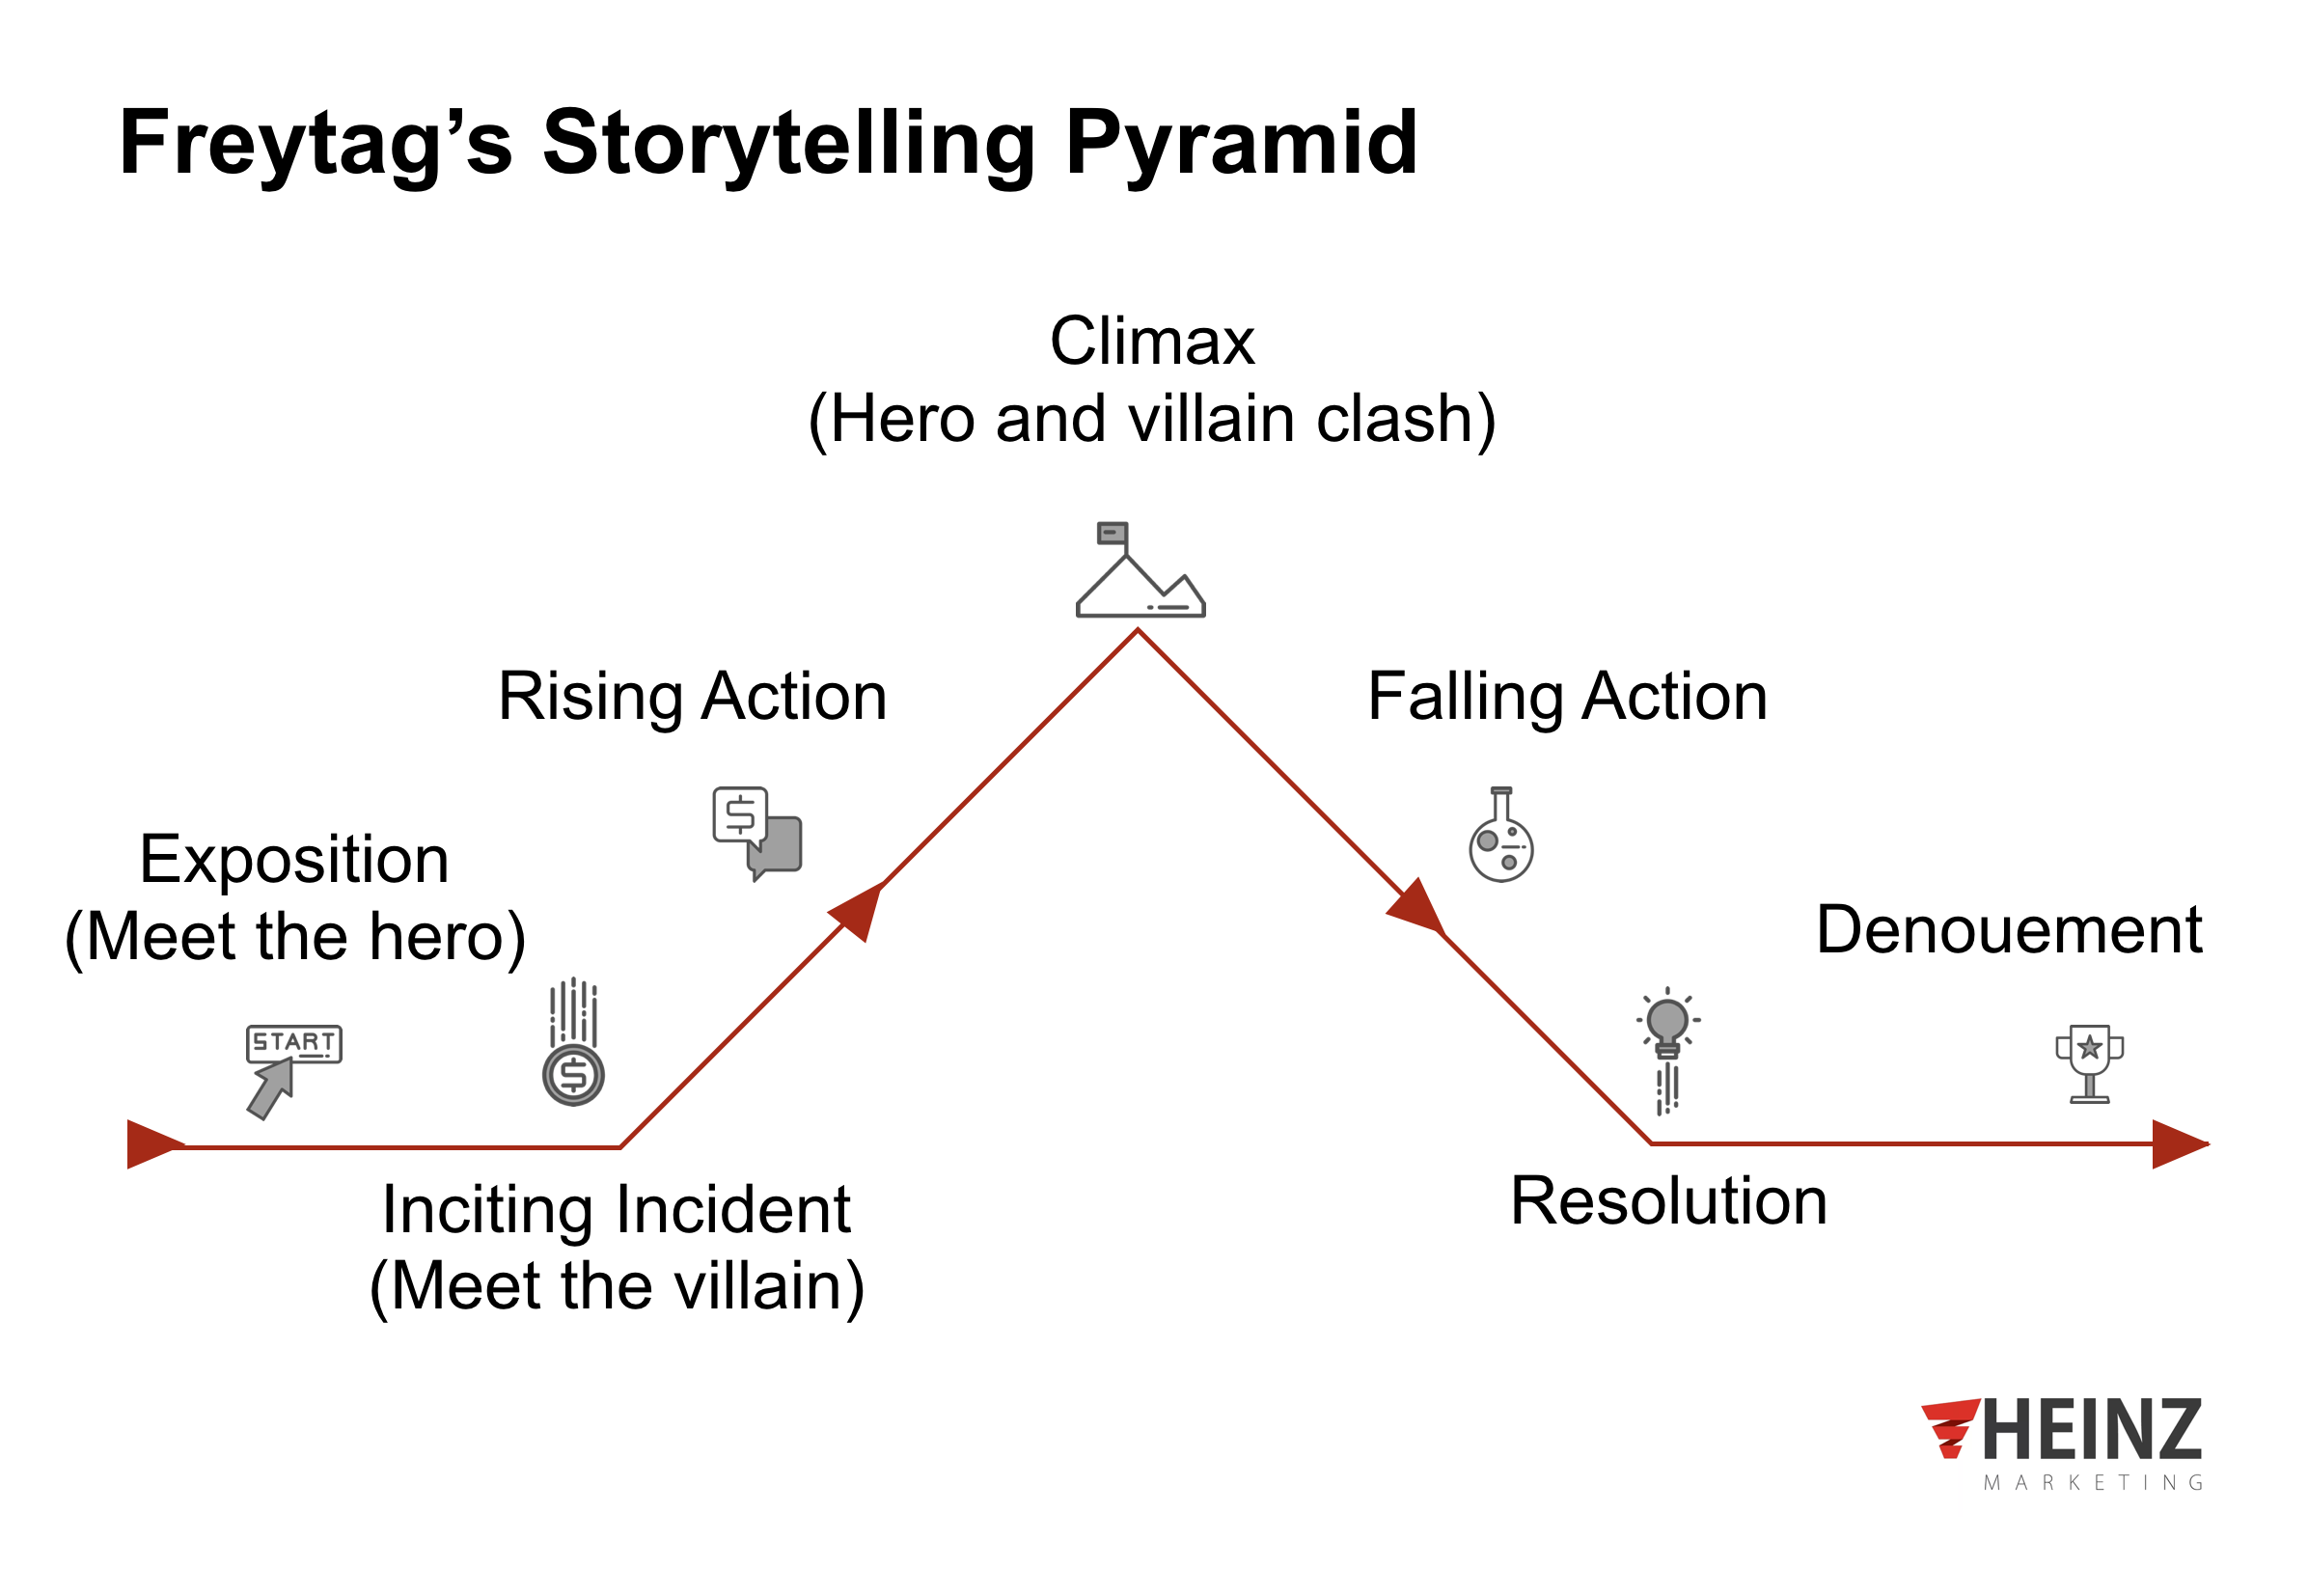 Mockup graphic depicting Freytag's Storytelling Pyramid